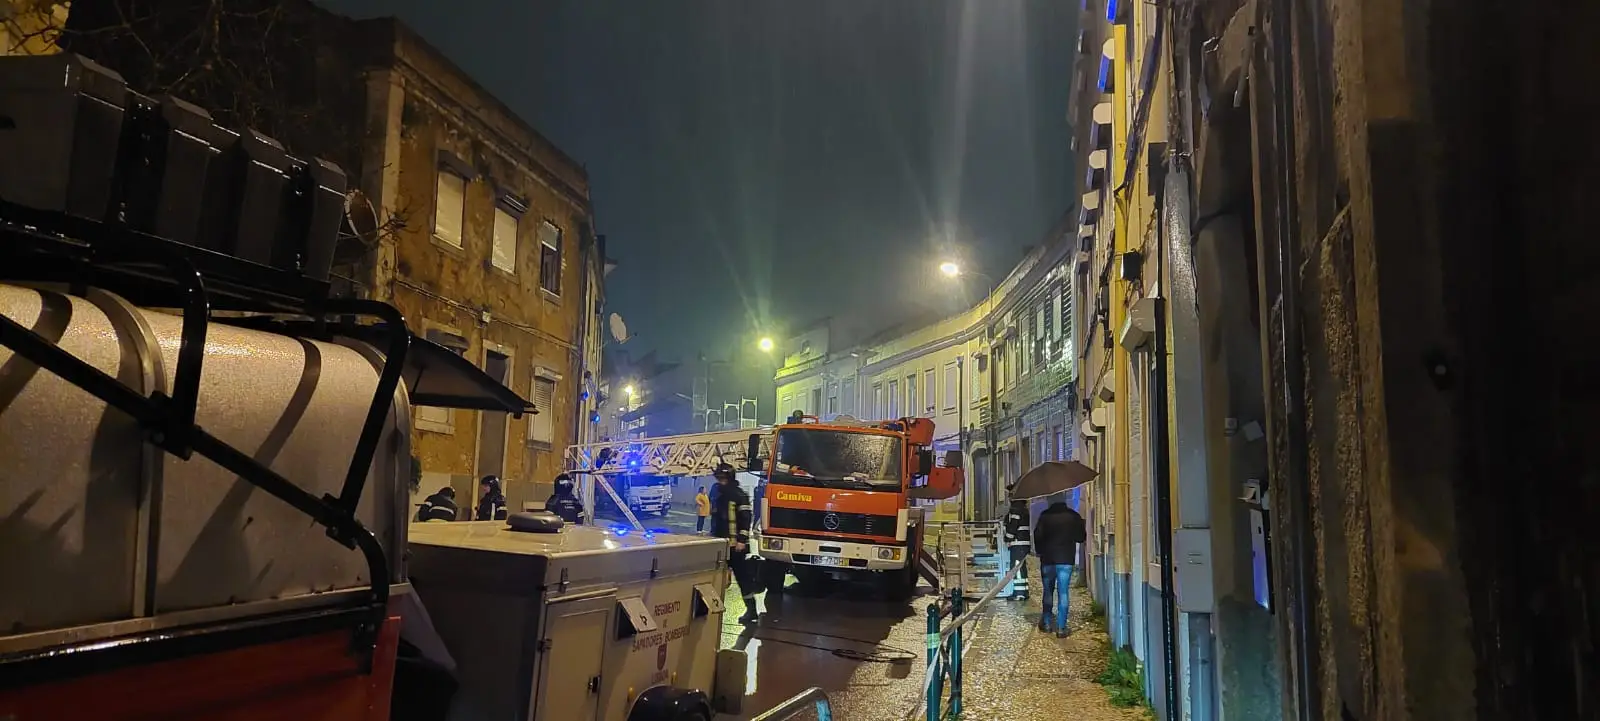 Derrocada em prédio devoluto corta trânsito em rua de Lisboa